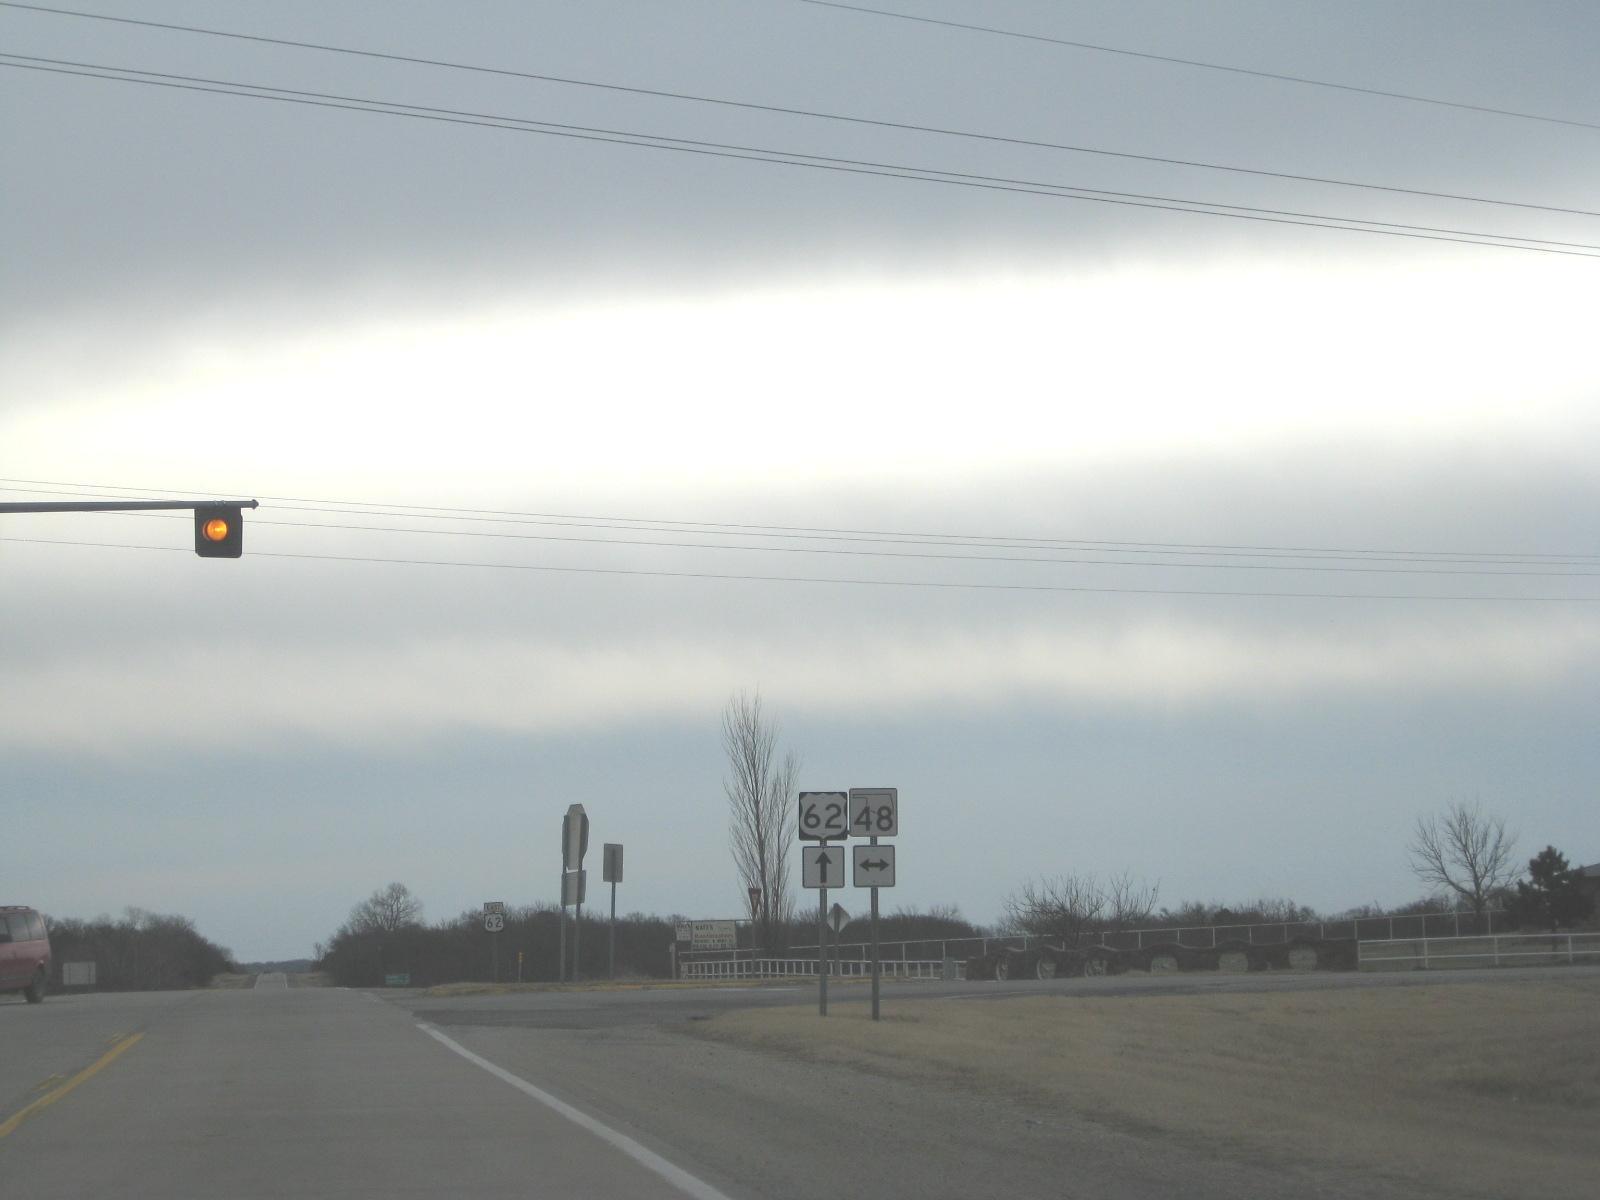 62 ok. Oklahoma Road Junction. Щит u62. Wikimedia Oklahoma.